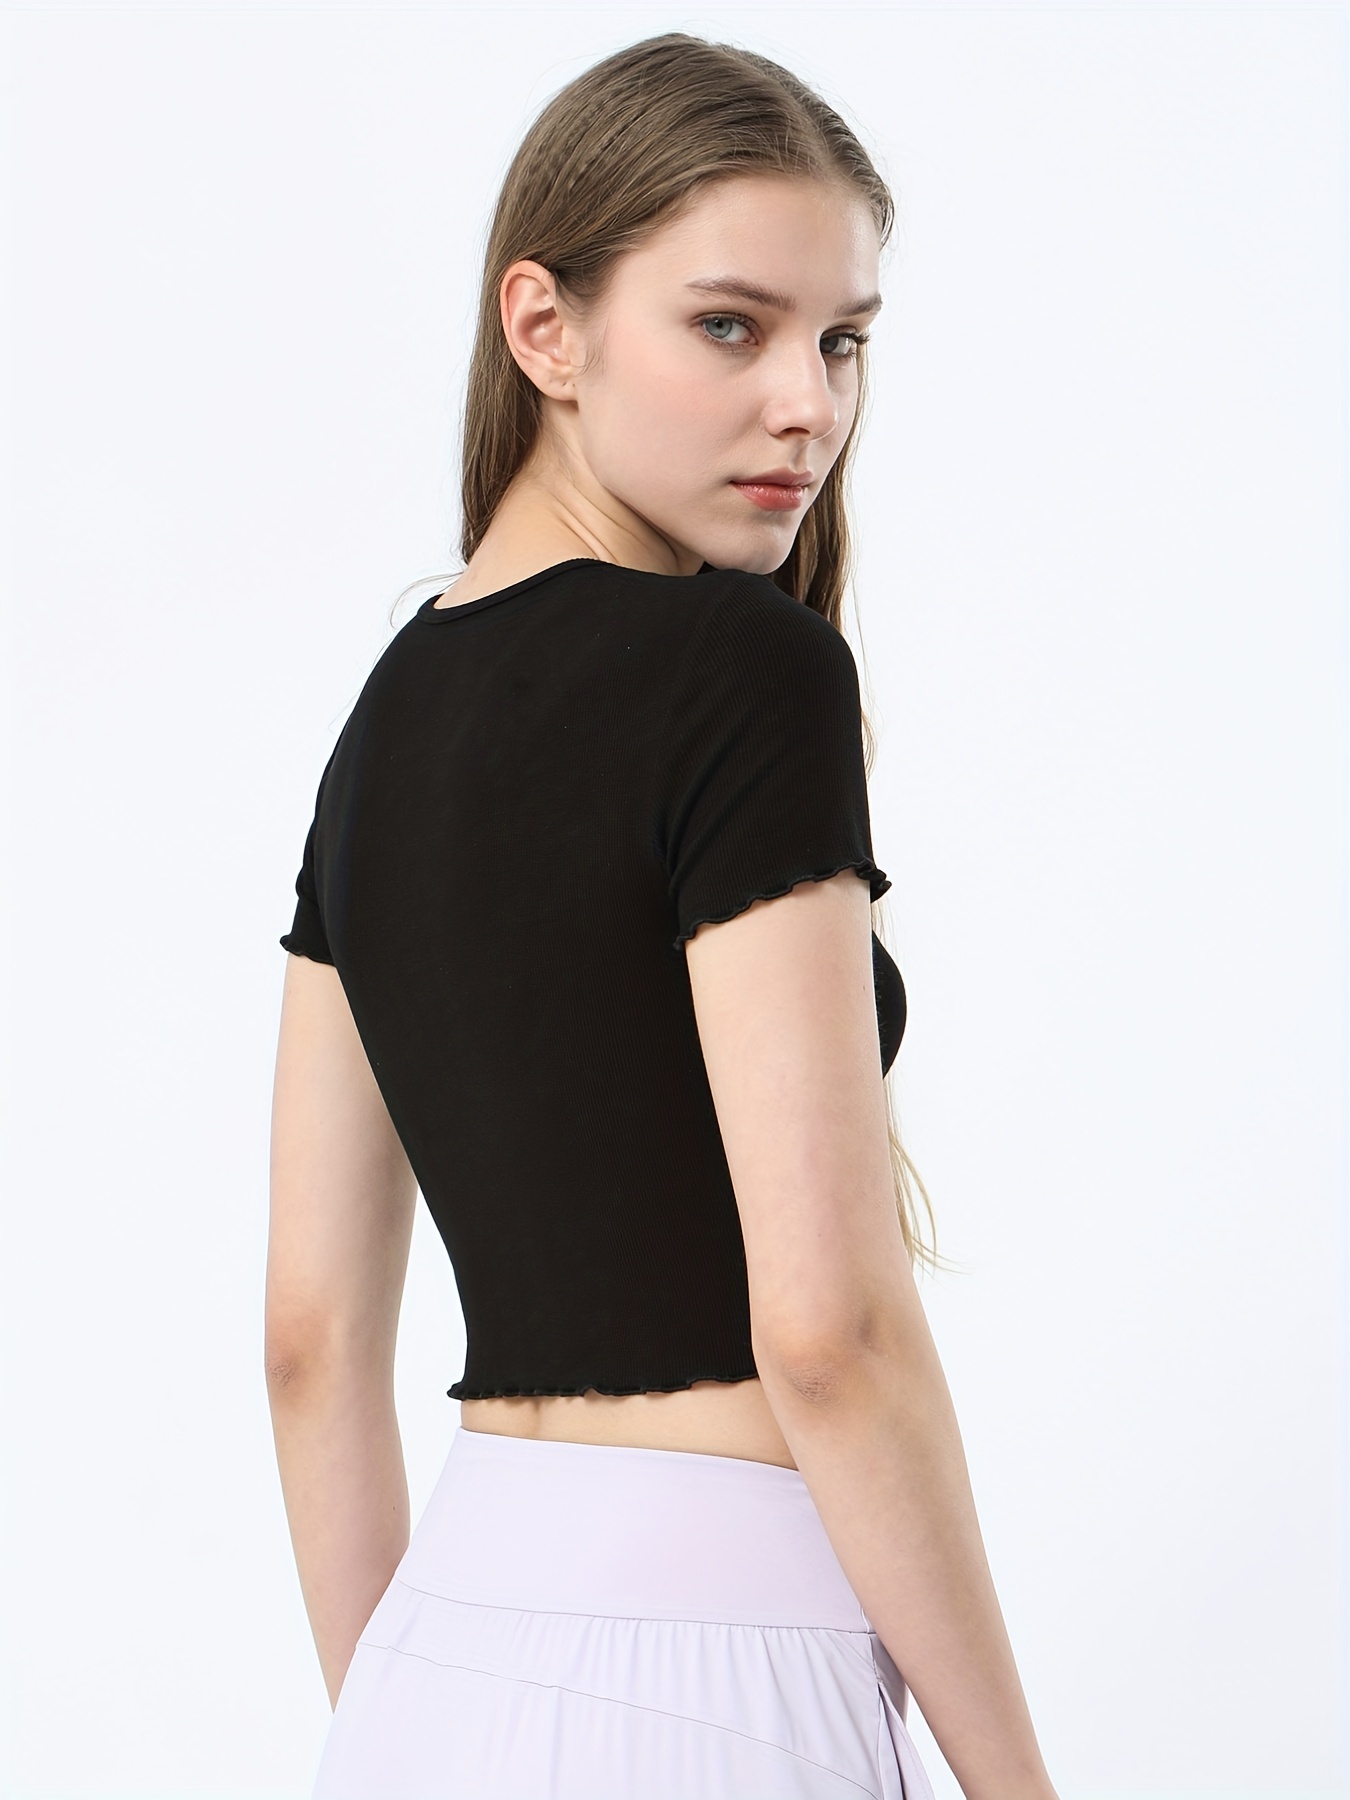 Elastic Soft Yoga Pleated Shirt, Breathable Pilates V-Neck Sport Crop Top,  Women's Tops